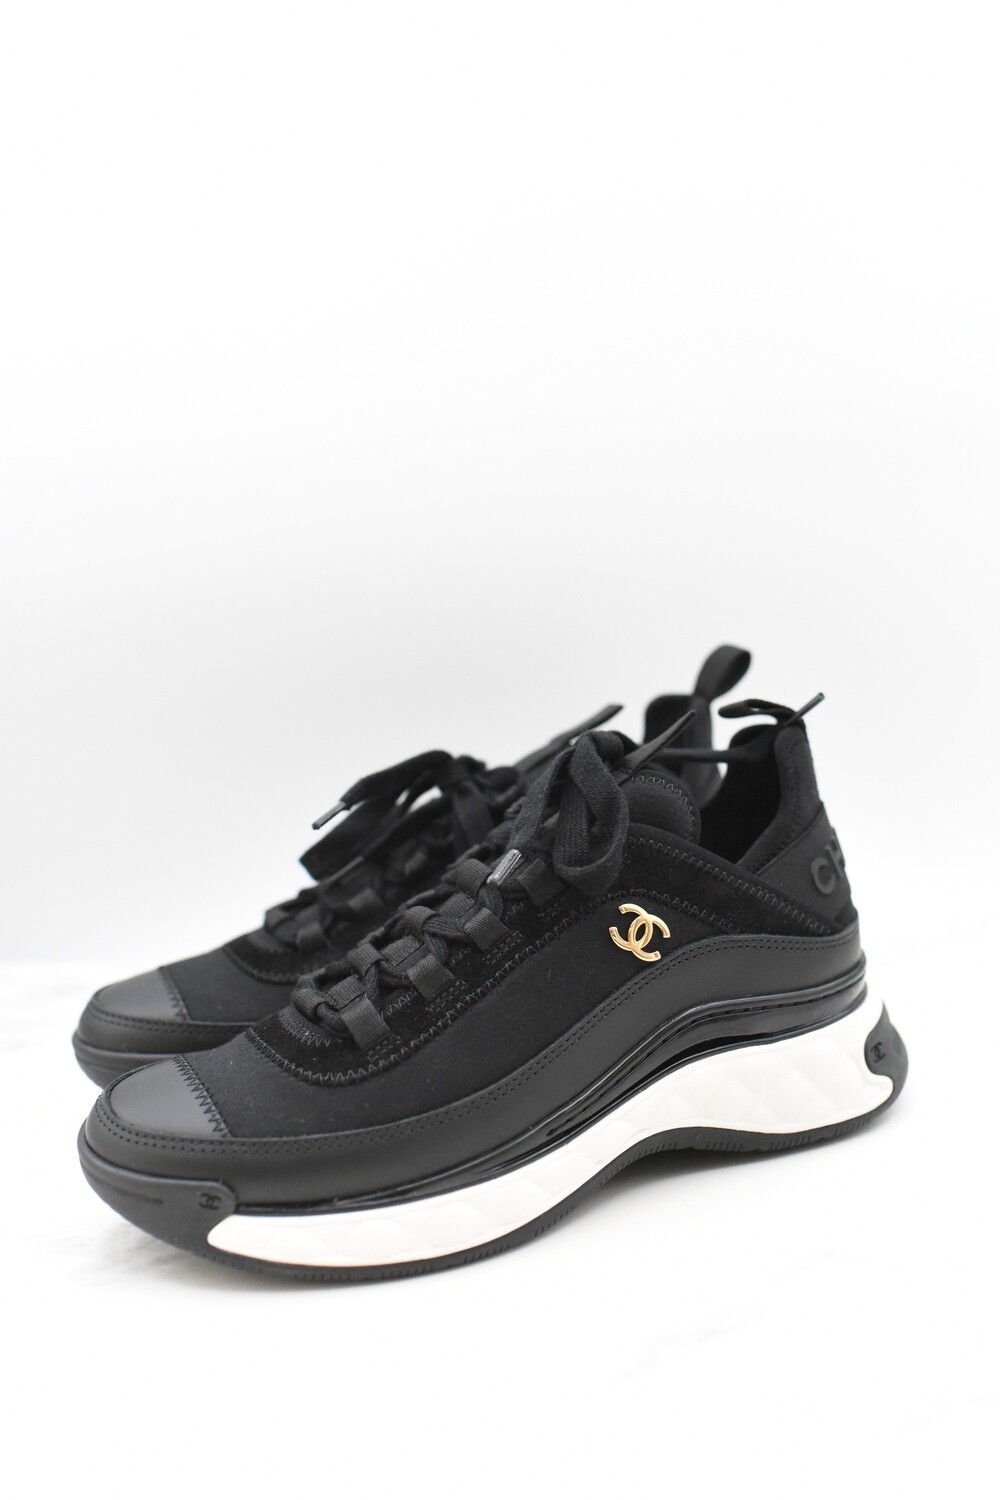 Chanel Sneakers Size 36.5, Black, New In Box GA003